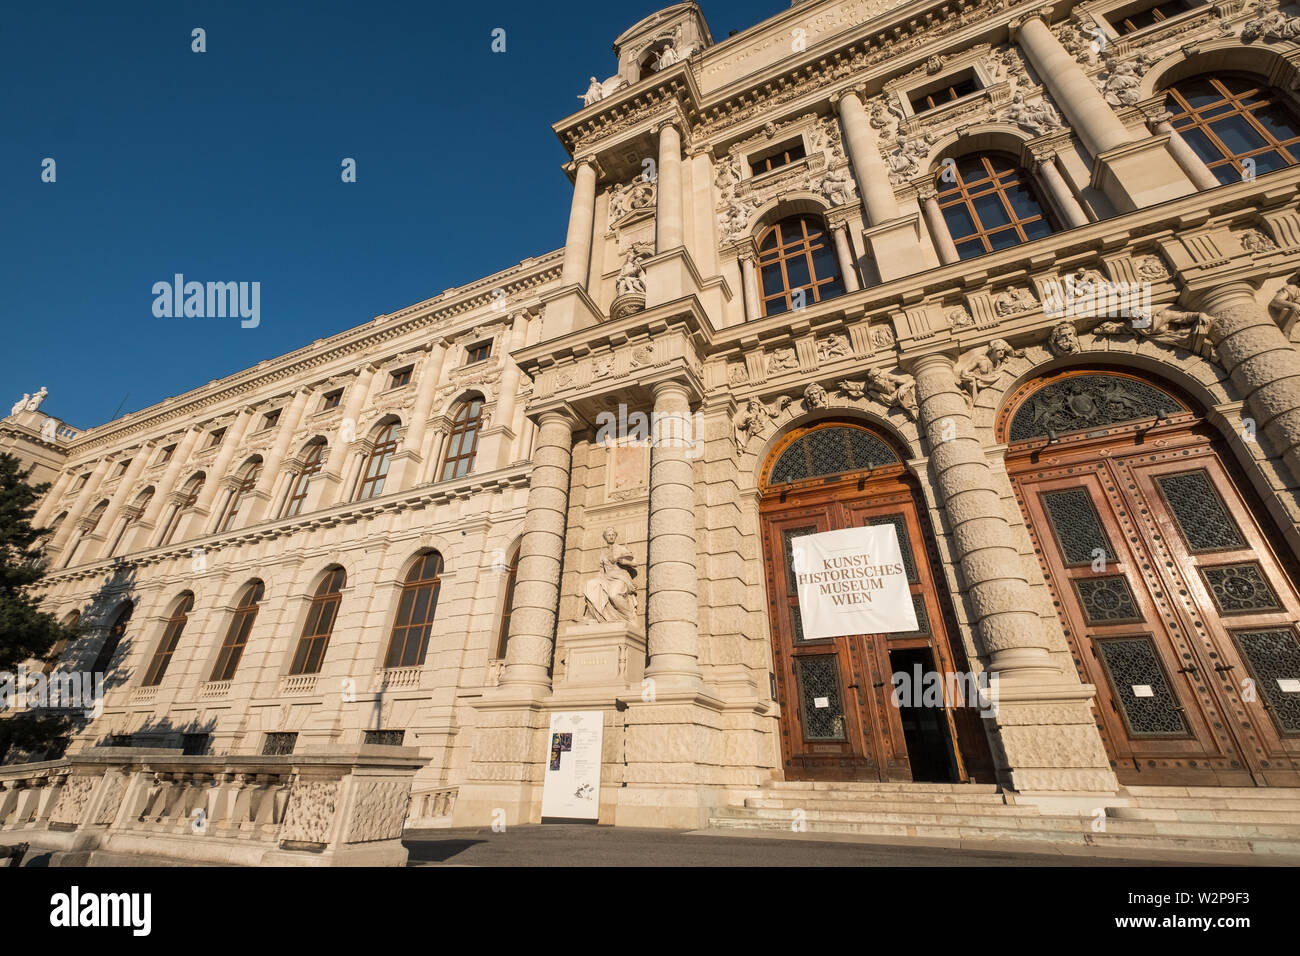 Exterior facade detail of Kunsthistorisches Museum (Museum of Art History), Maria-Theresien-Platz, Vienna, Austria Stock Photo